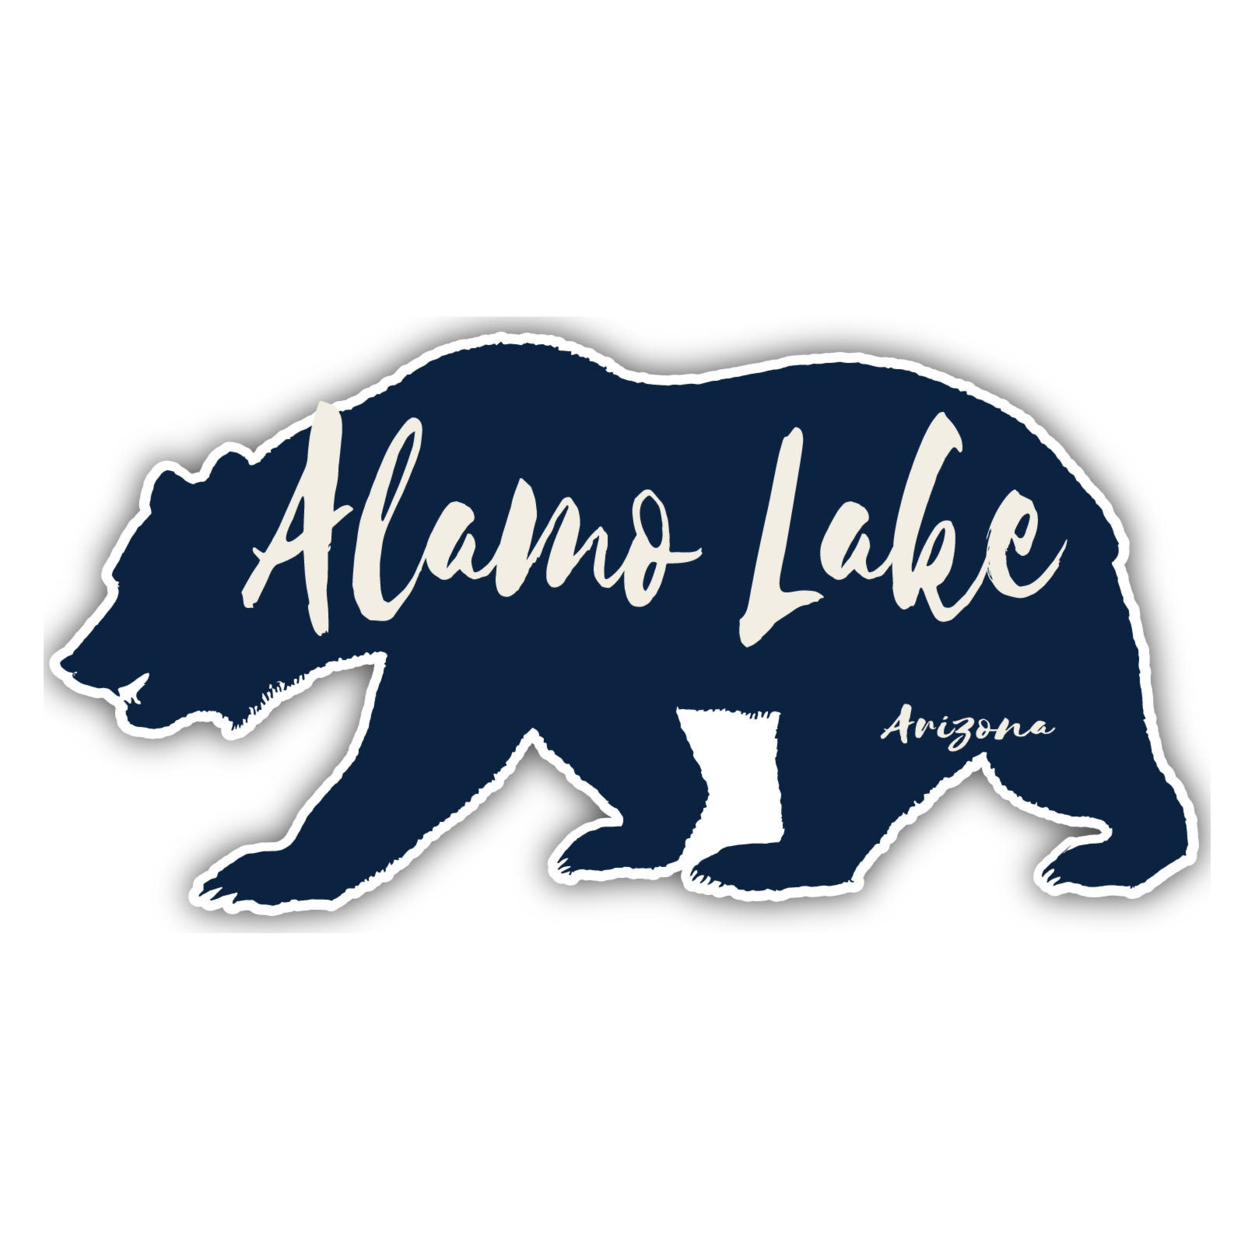 Alamo Lake Arizona Souvenir Decorative Stickers (Choose Theme And Size) - Single Unit, 4-Inch, Camp Life